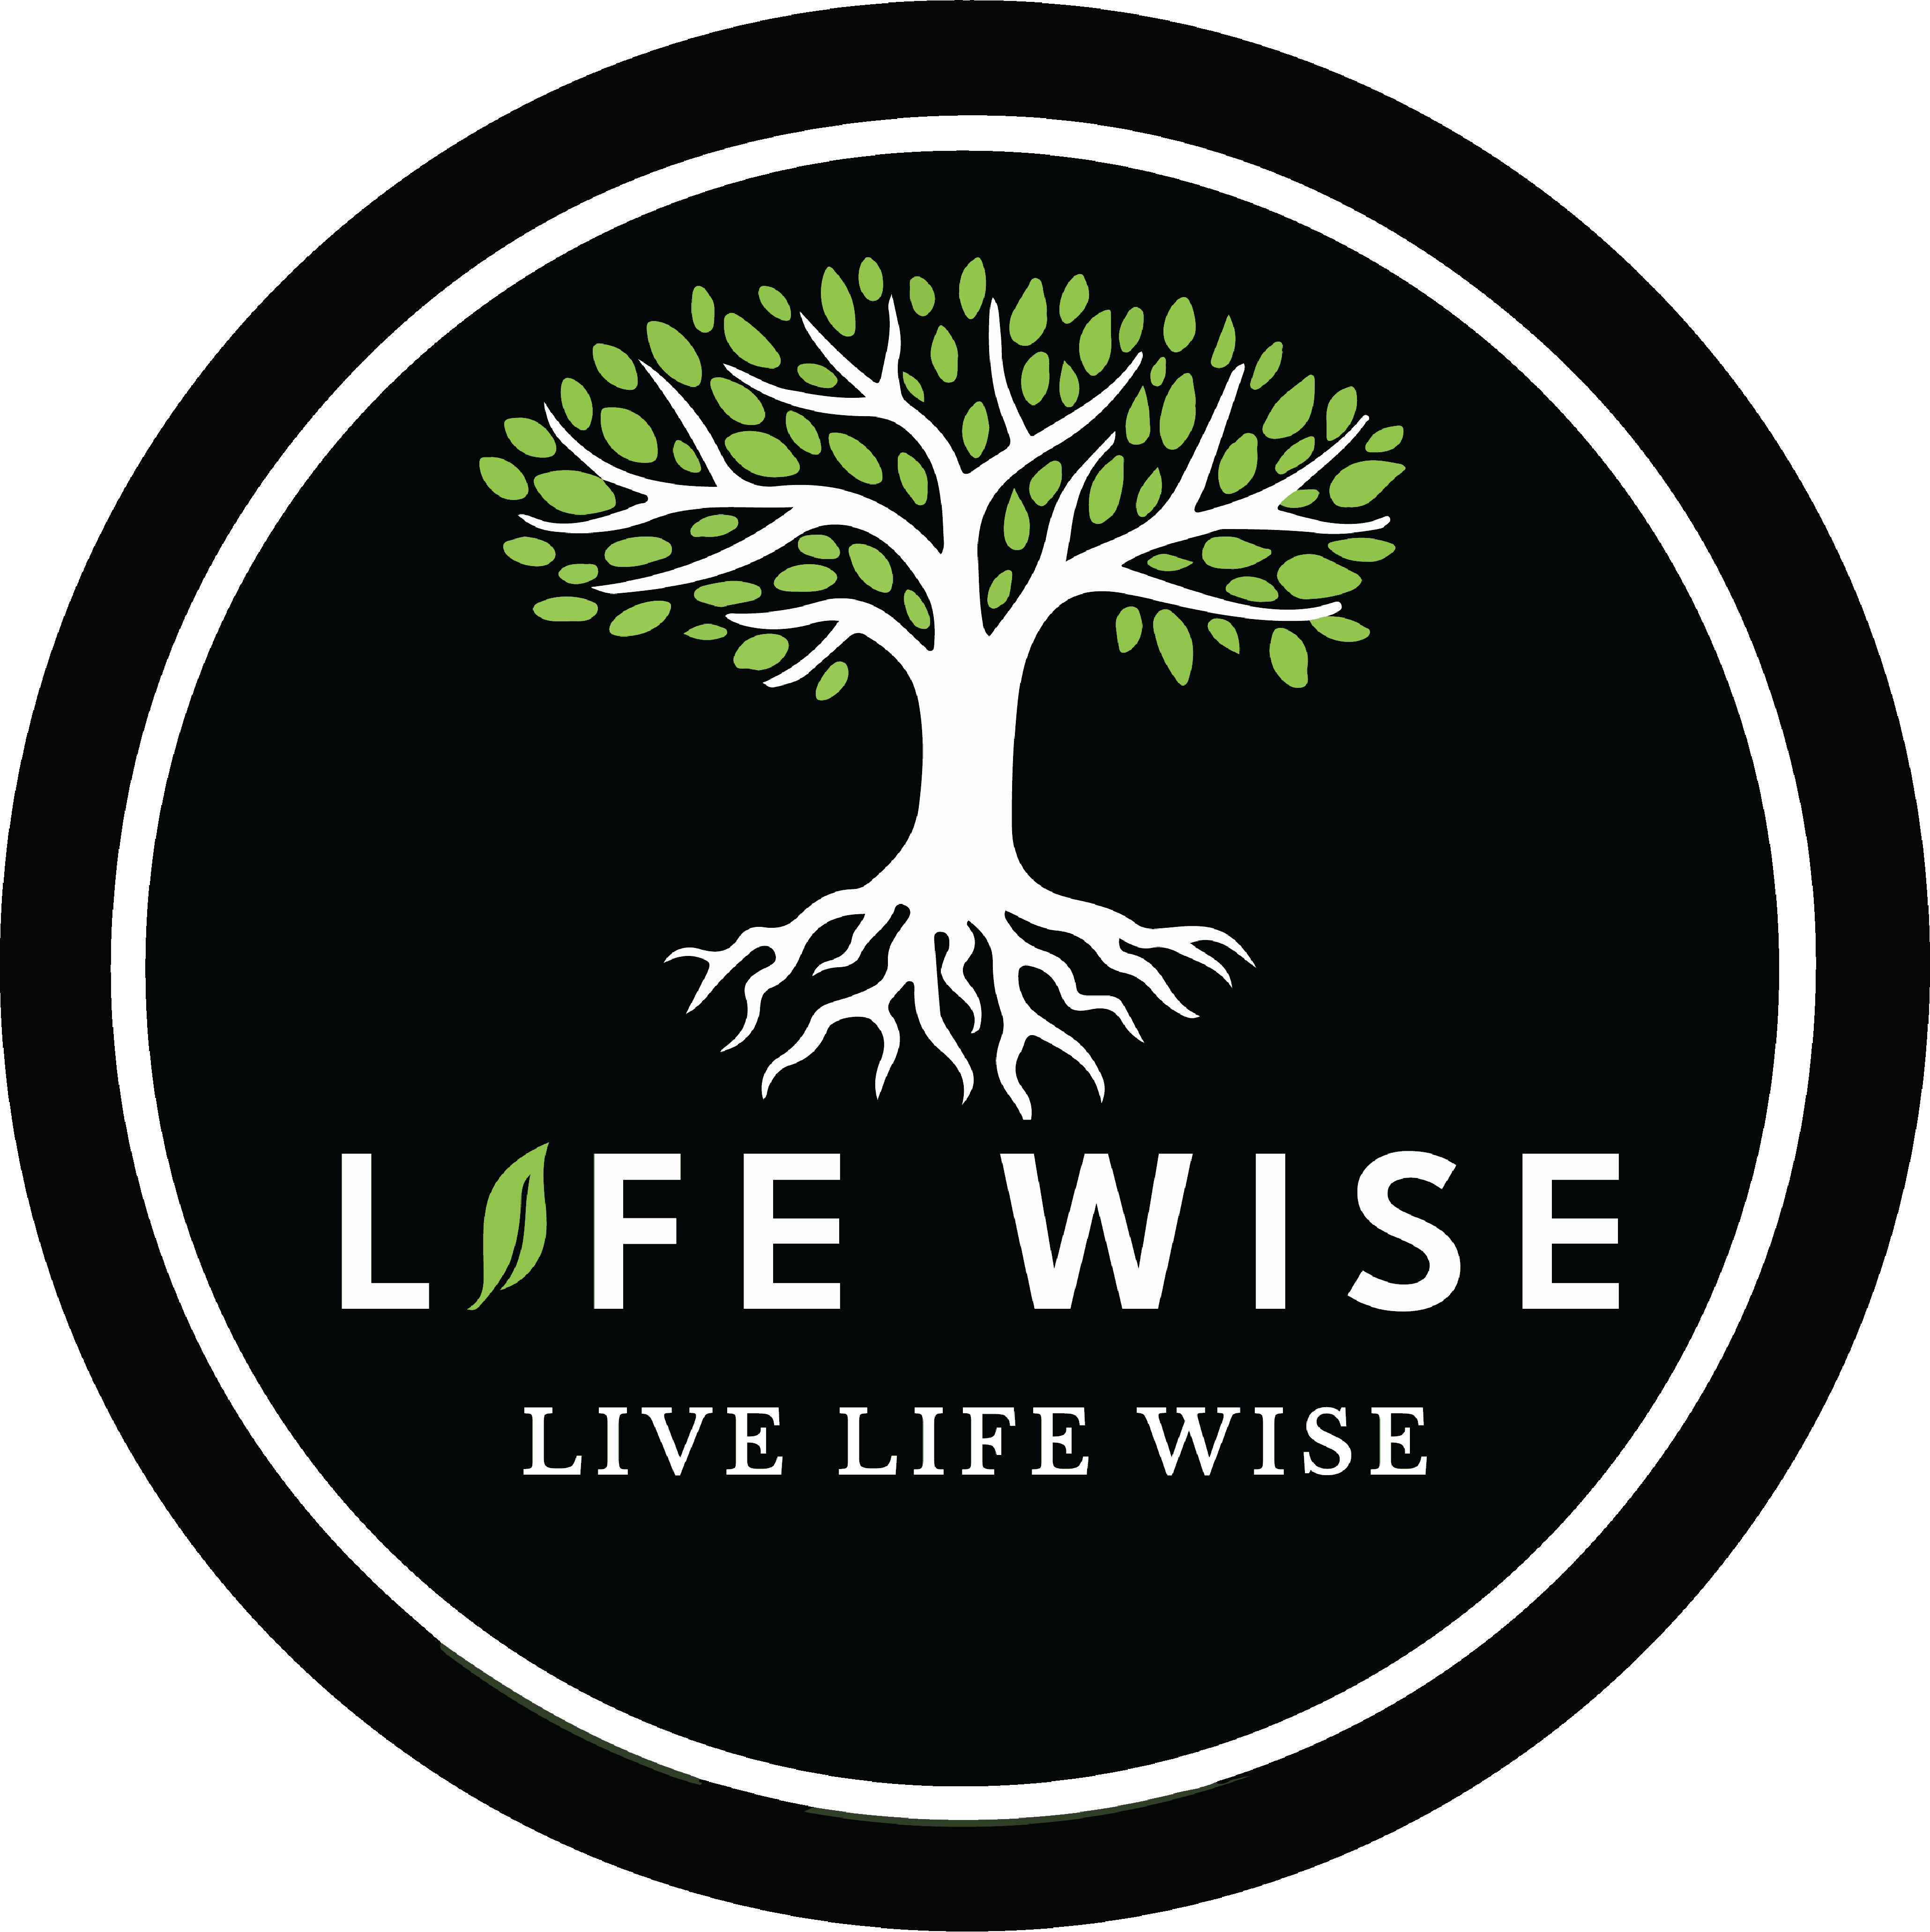 Lifewise